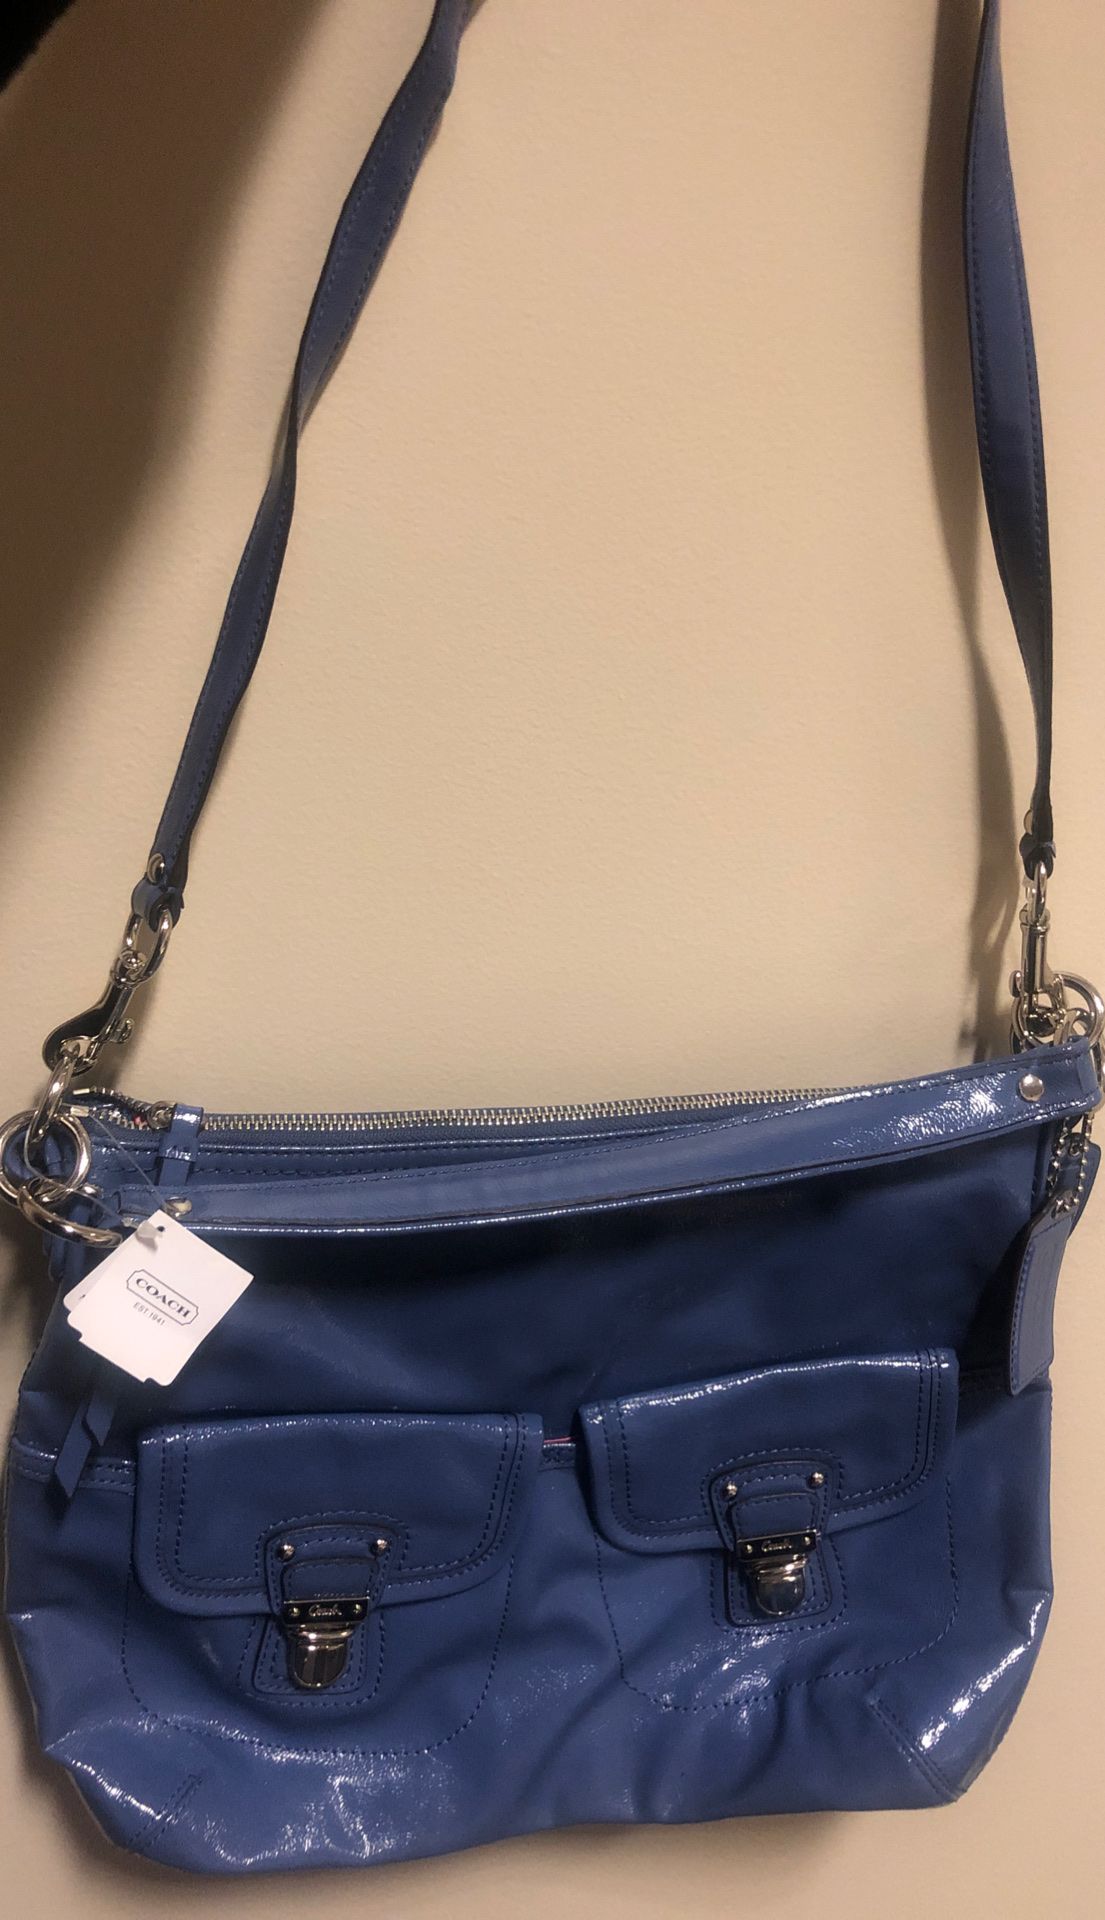 COACH NEW- Blueish purse